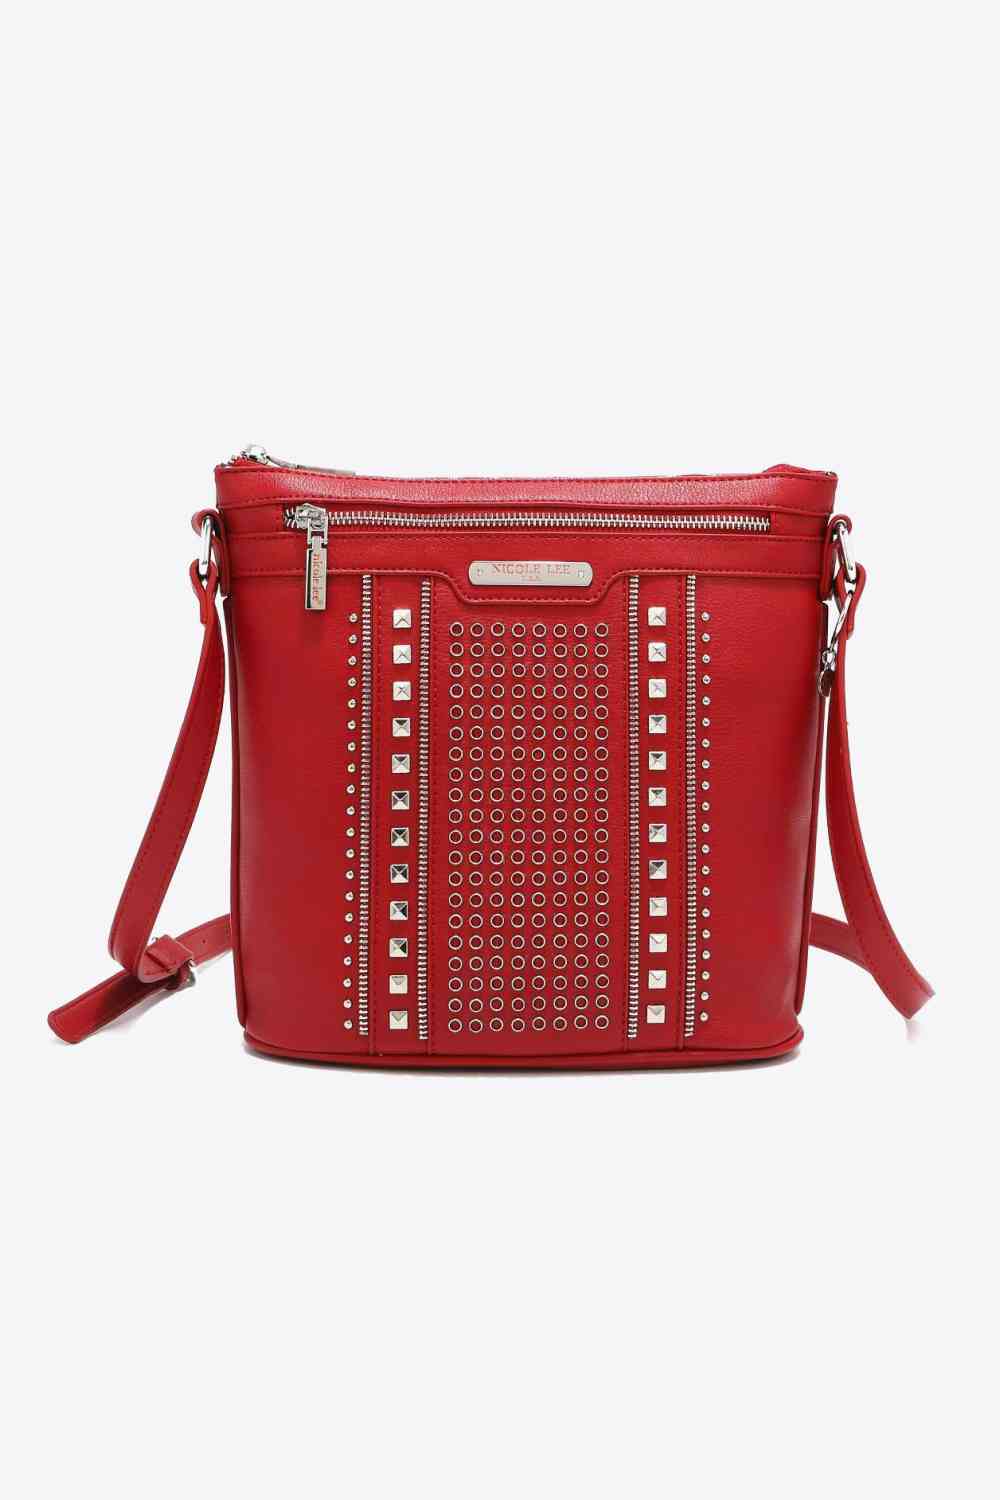 Nicole Lee USA Love Handbag - SELFTRITSS